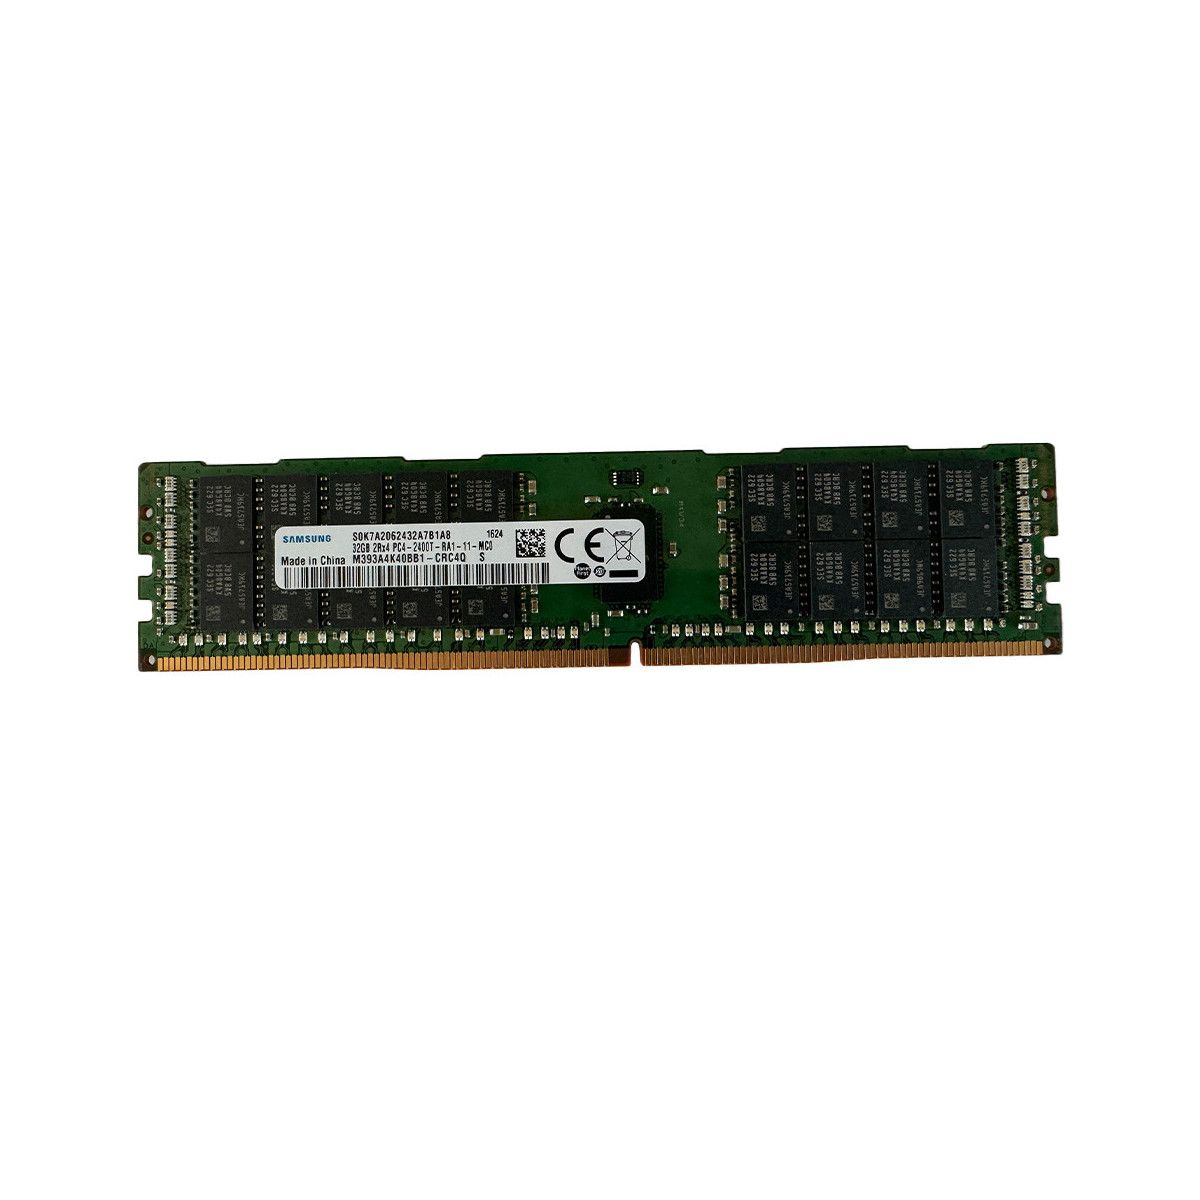 805351-B21-MS - Memstar 1x 32GB DDR4-2400 RDIMM PC4-19200T-R - Memorie OEM compatibilă Mem-Star 1 - Memstar 